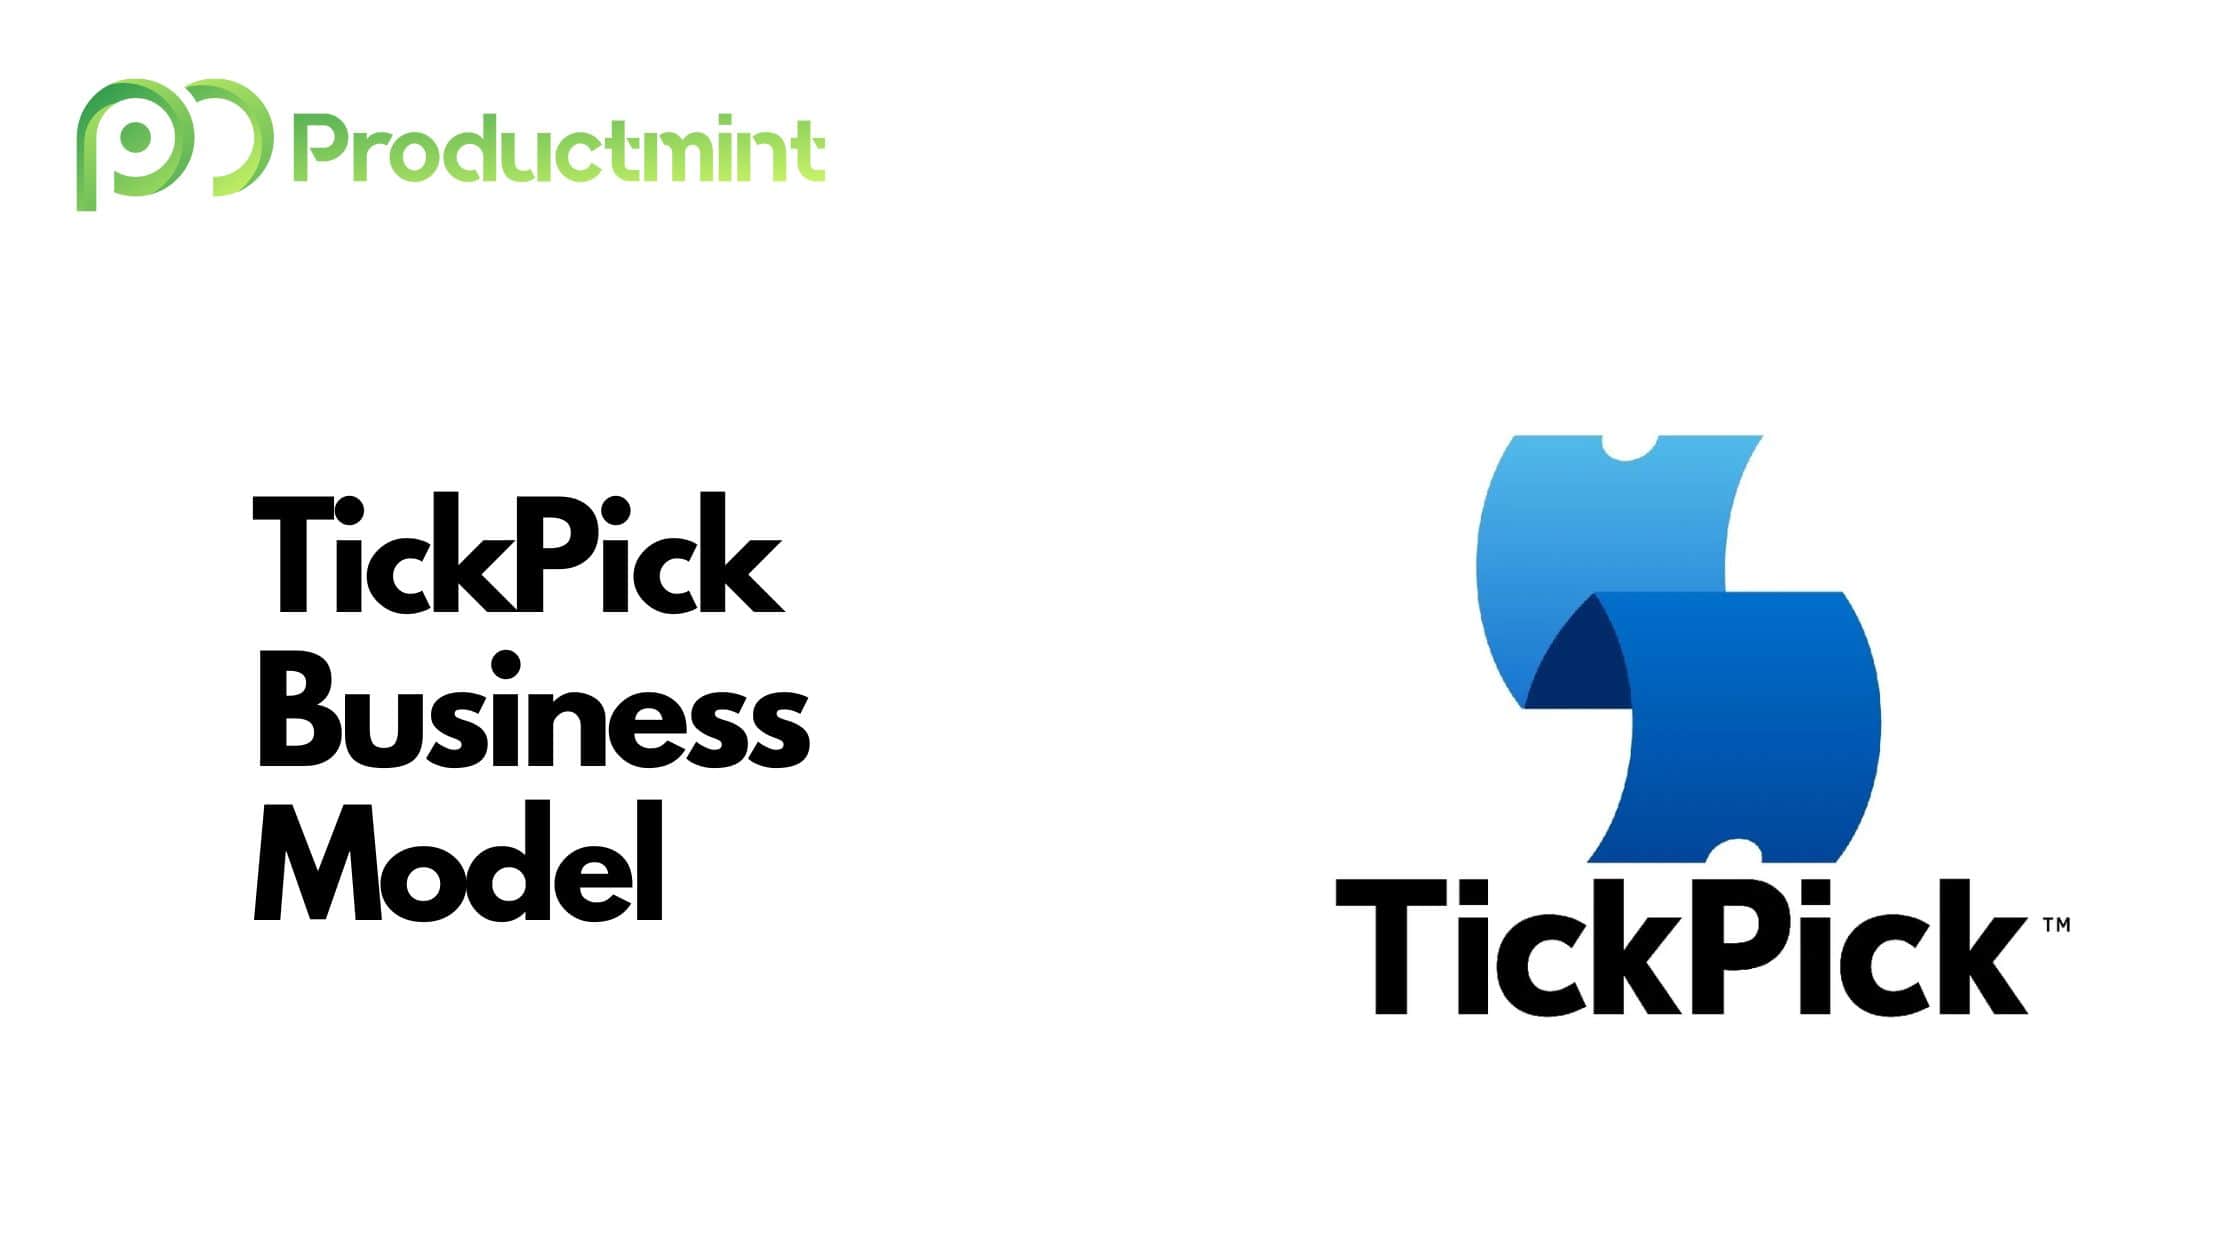 How TickPick Makes Money